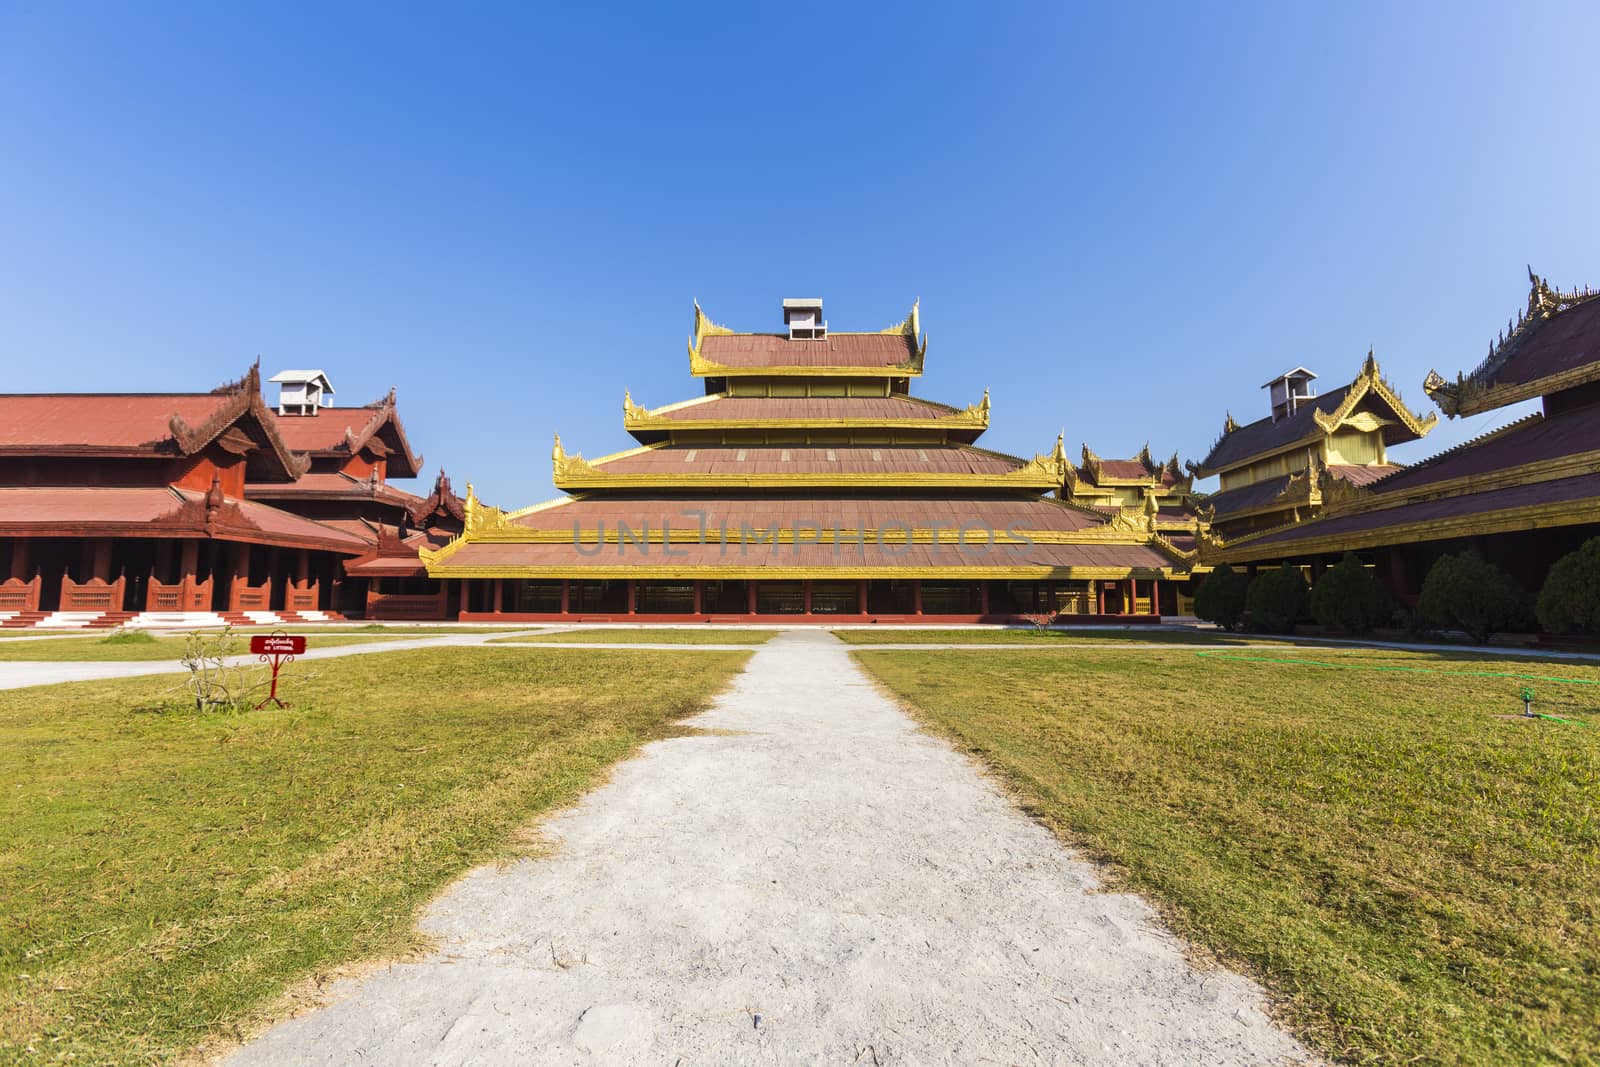 Mandalay palace. Mandalay. Myanmar or Burma